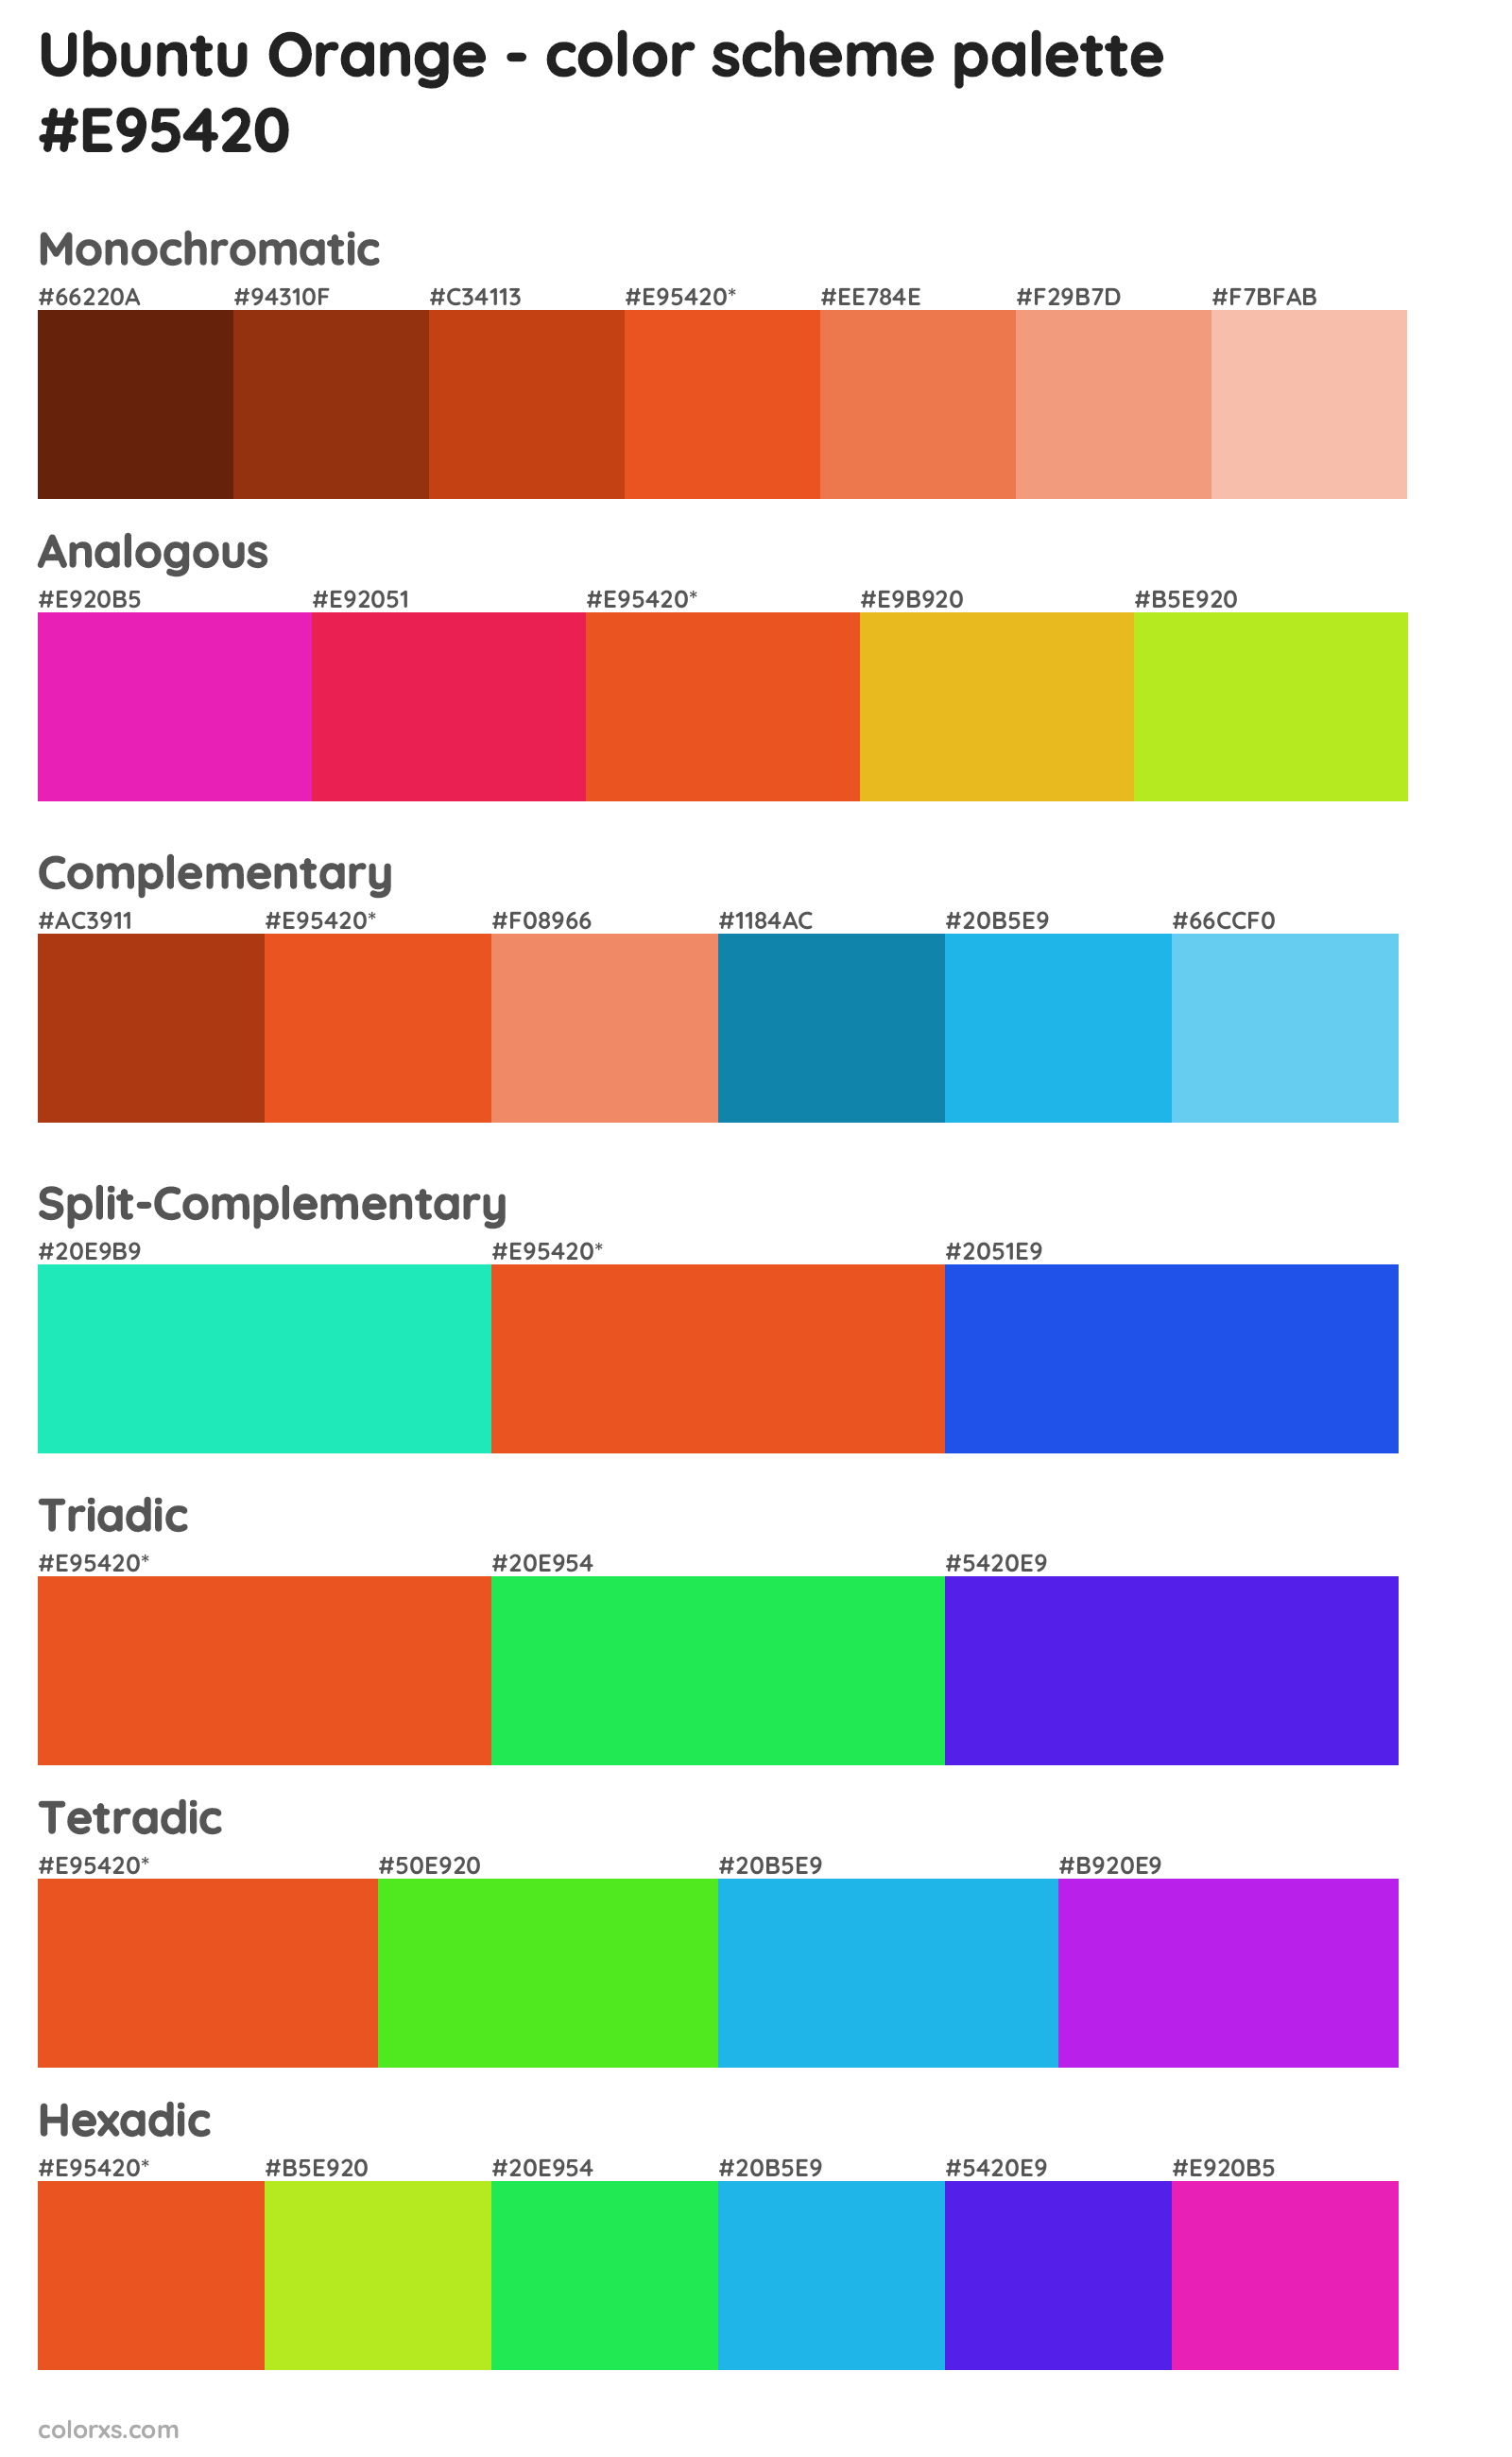 Ubuntu Orange Color Scheme Palettes